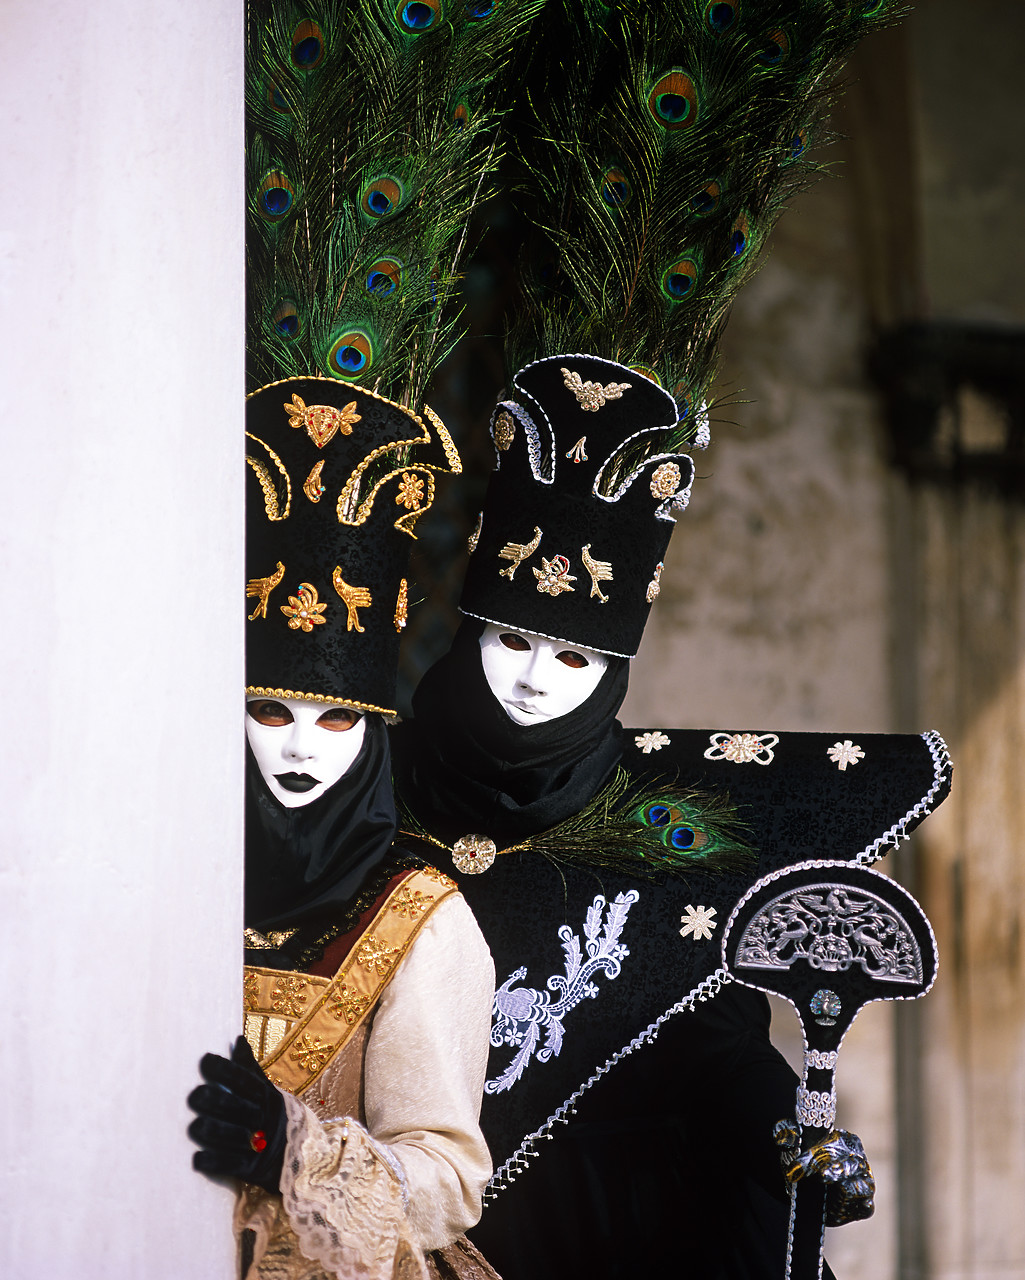 #990103-1 - Venice Carnivale Masks, Venice, Italy